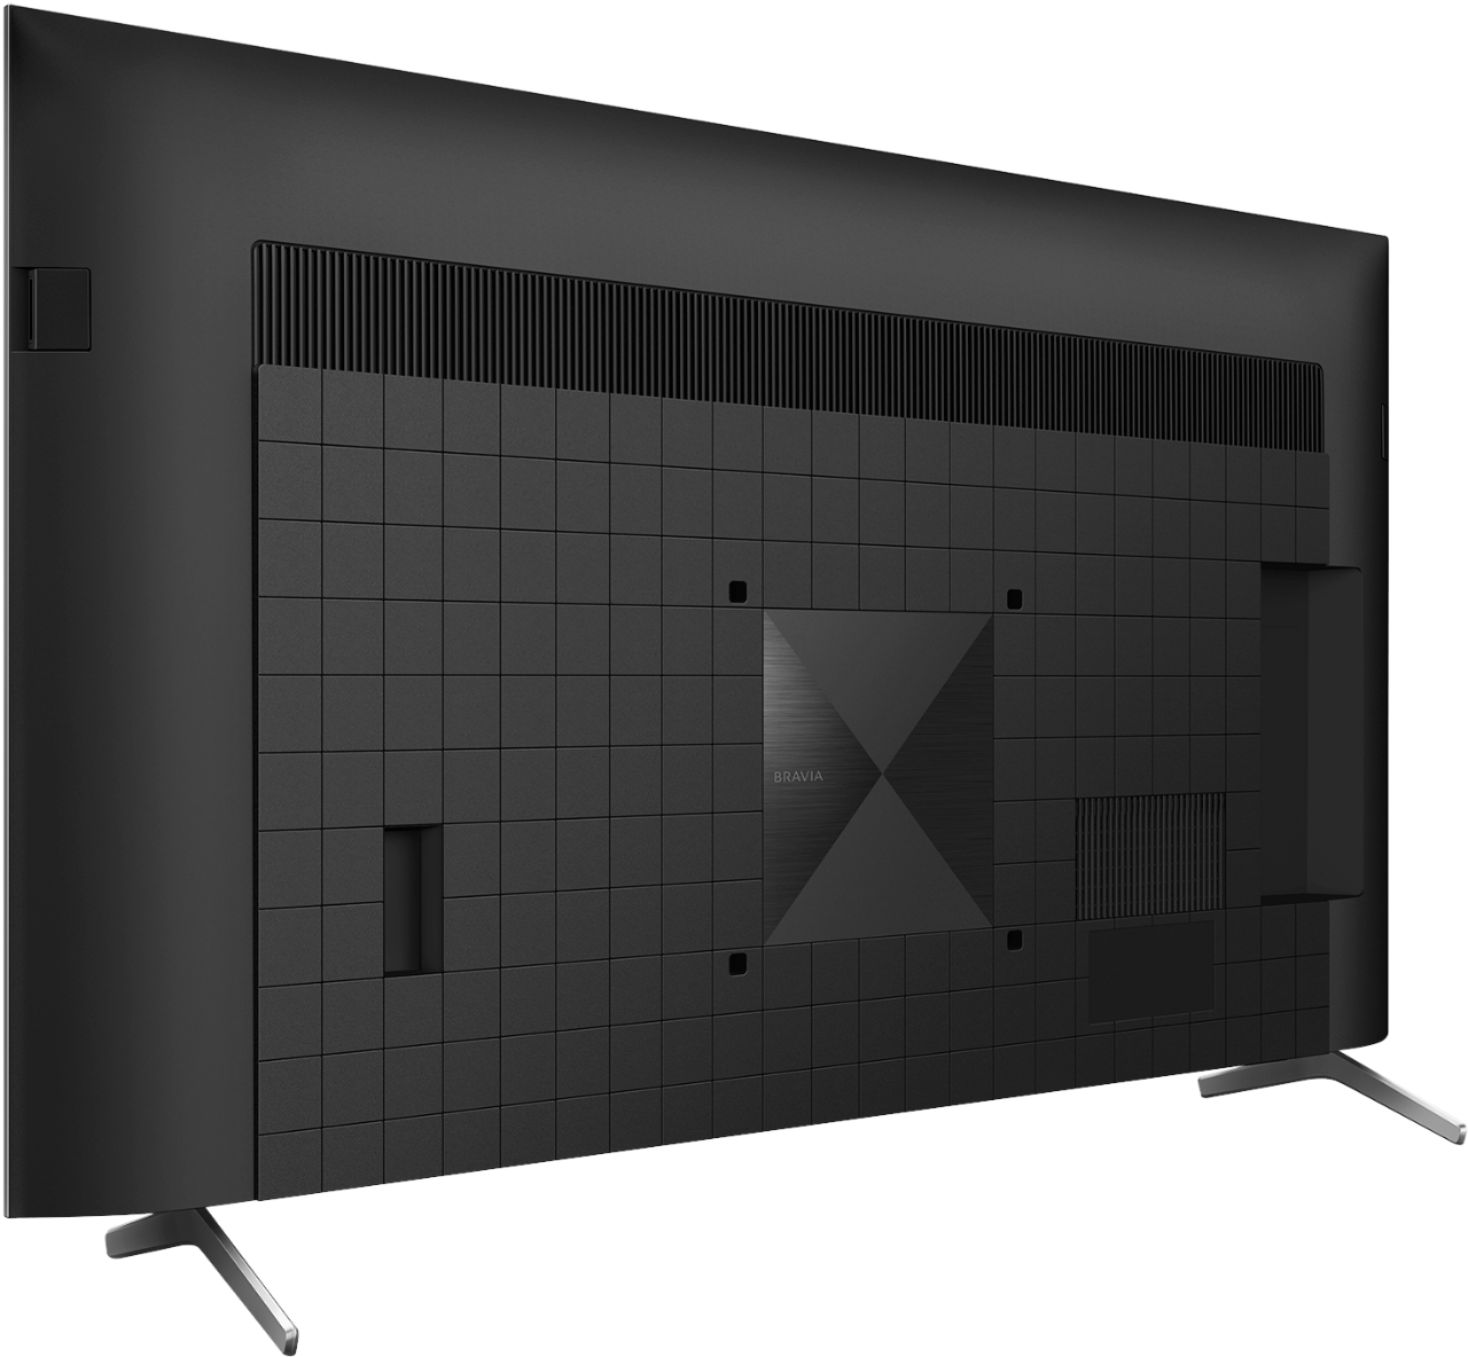 Angle View: Sony - 65" Class BRAVIA XR X90J Series LED 4K UHD Smart Google TV